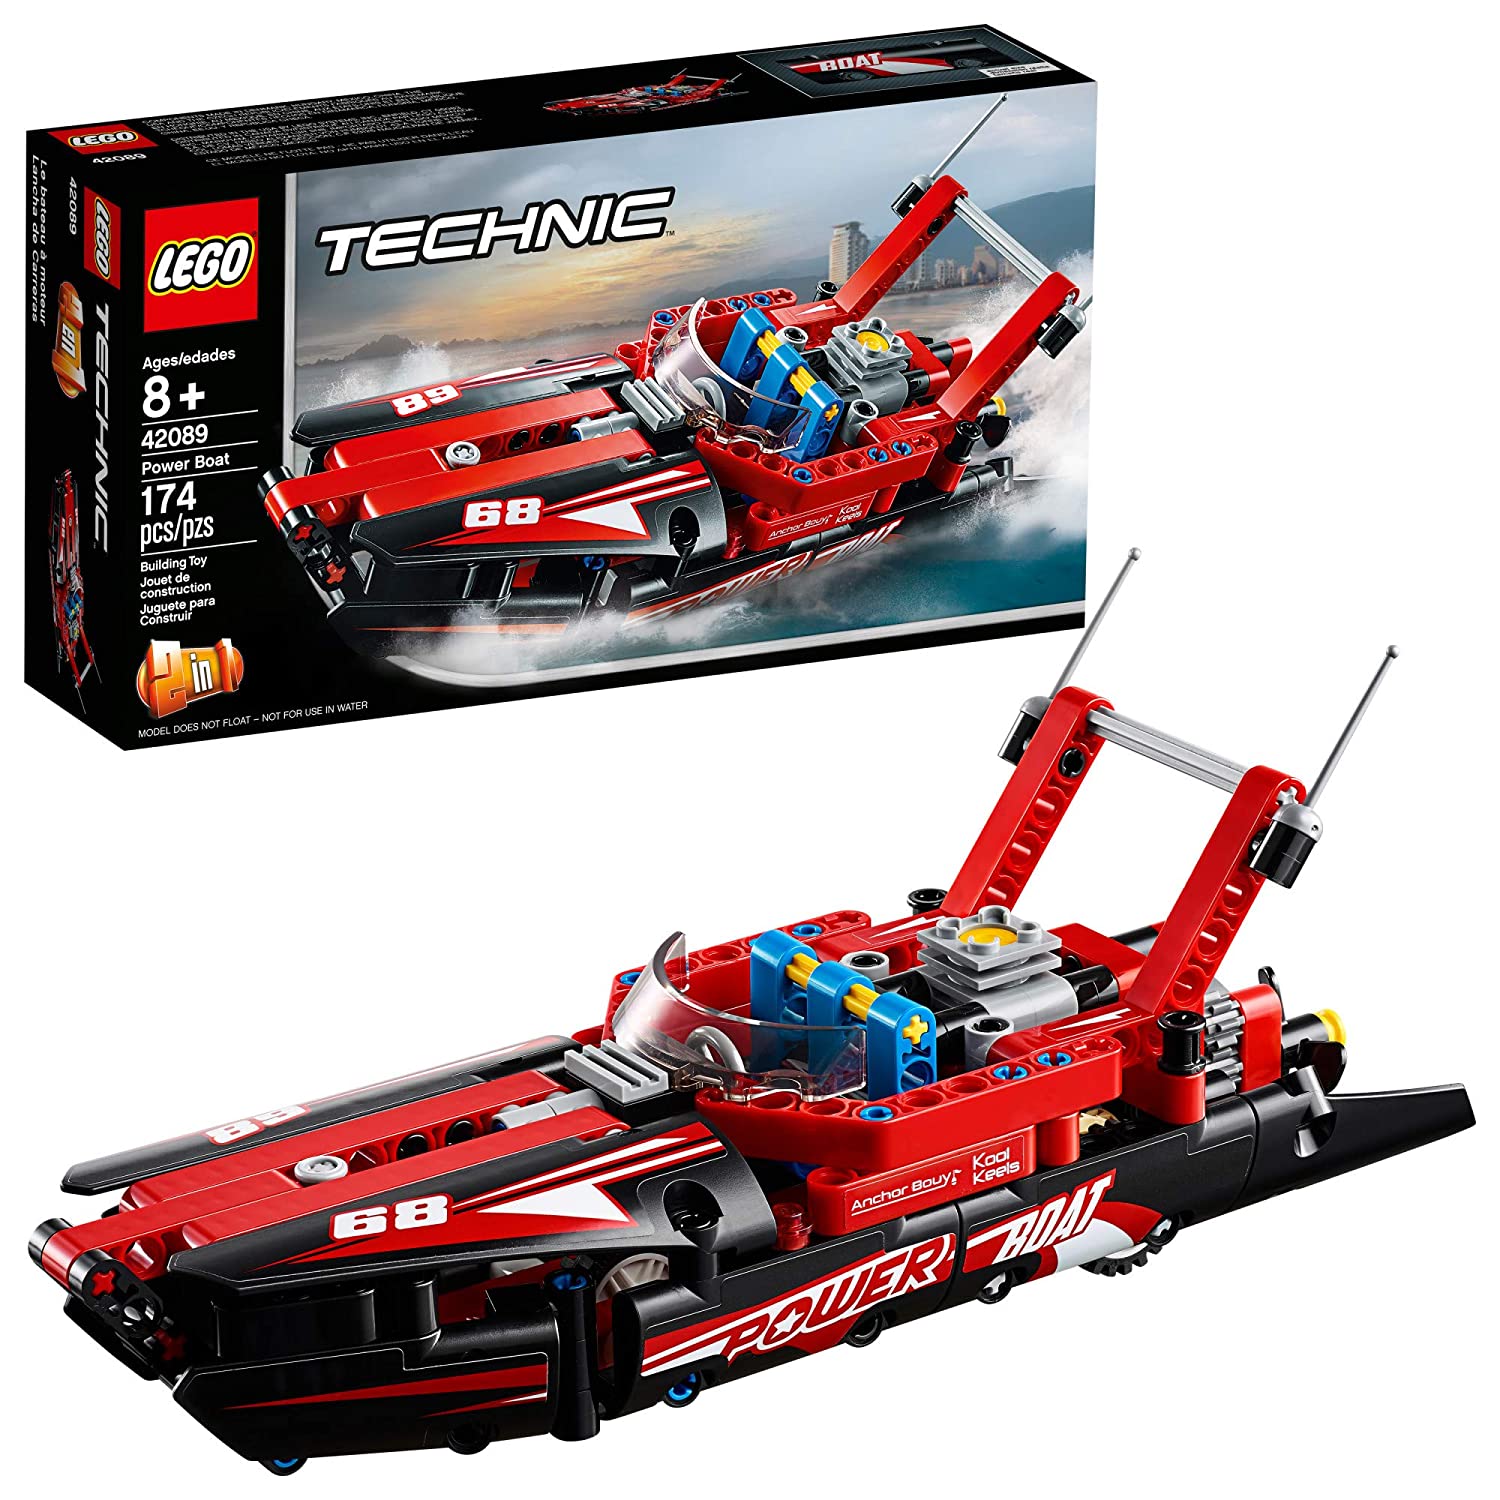 LEGO Technic Power Boat 42089 Building Kit , New 2019